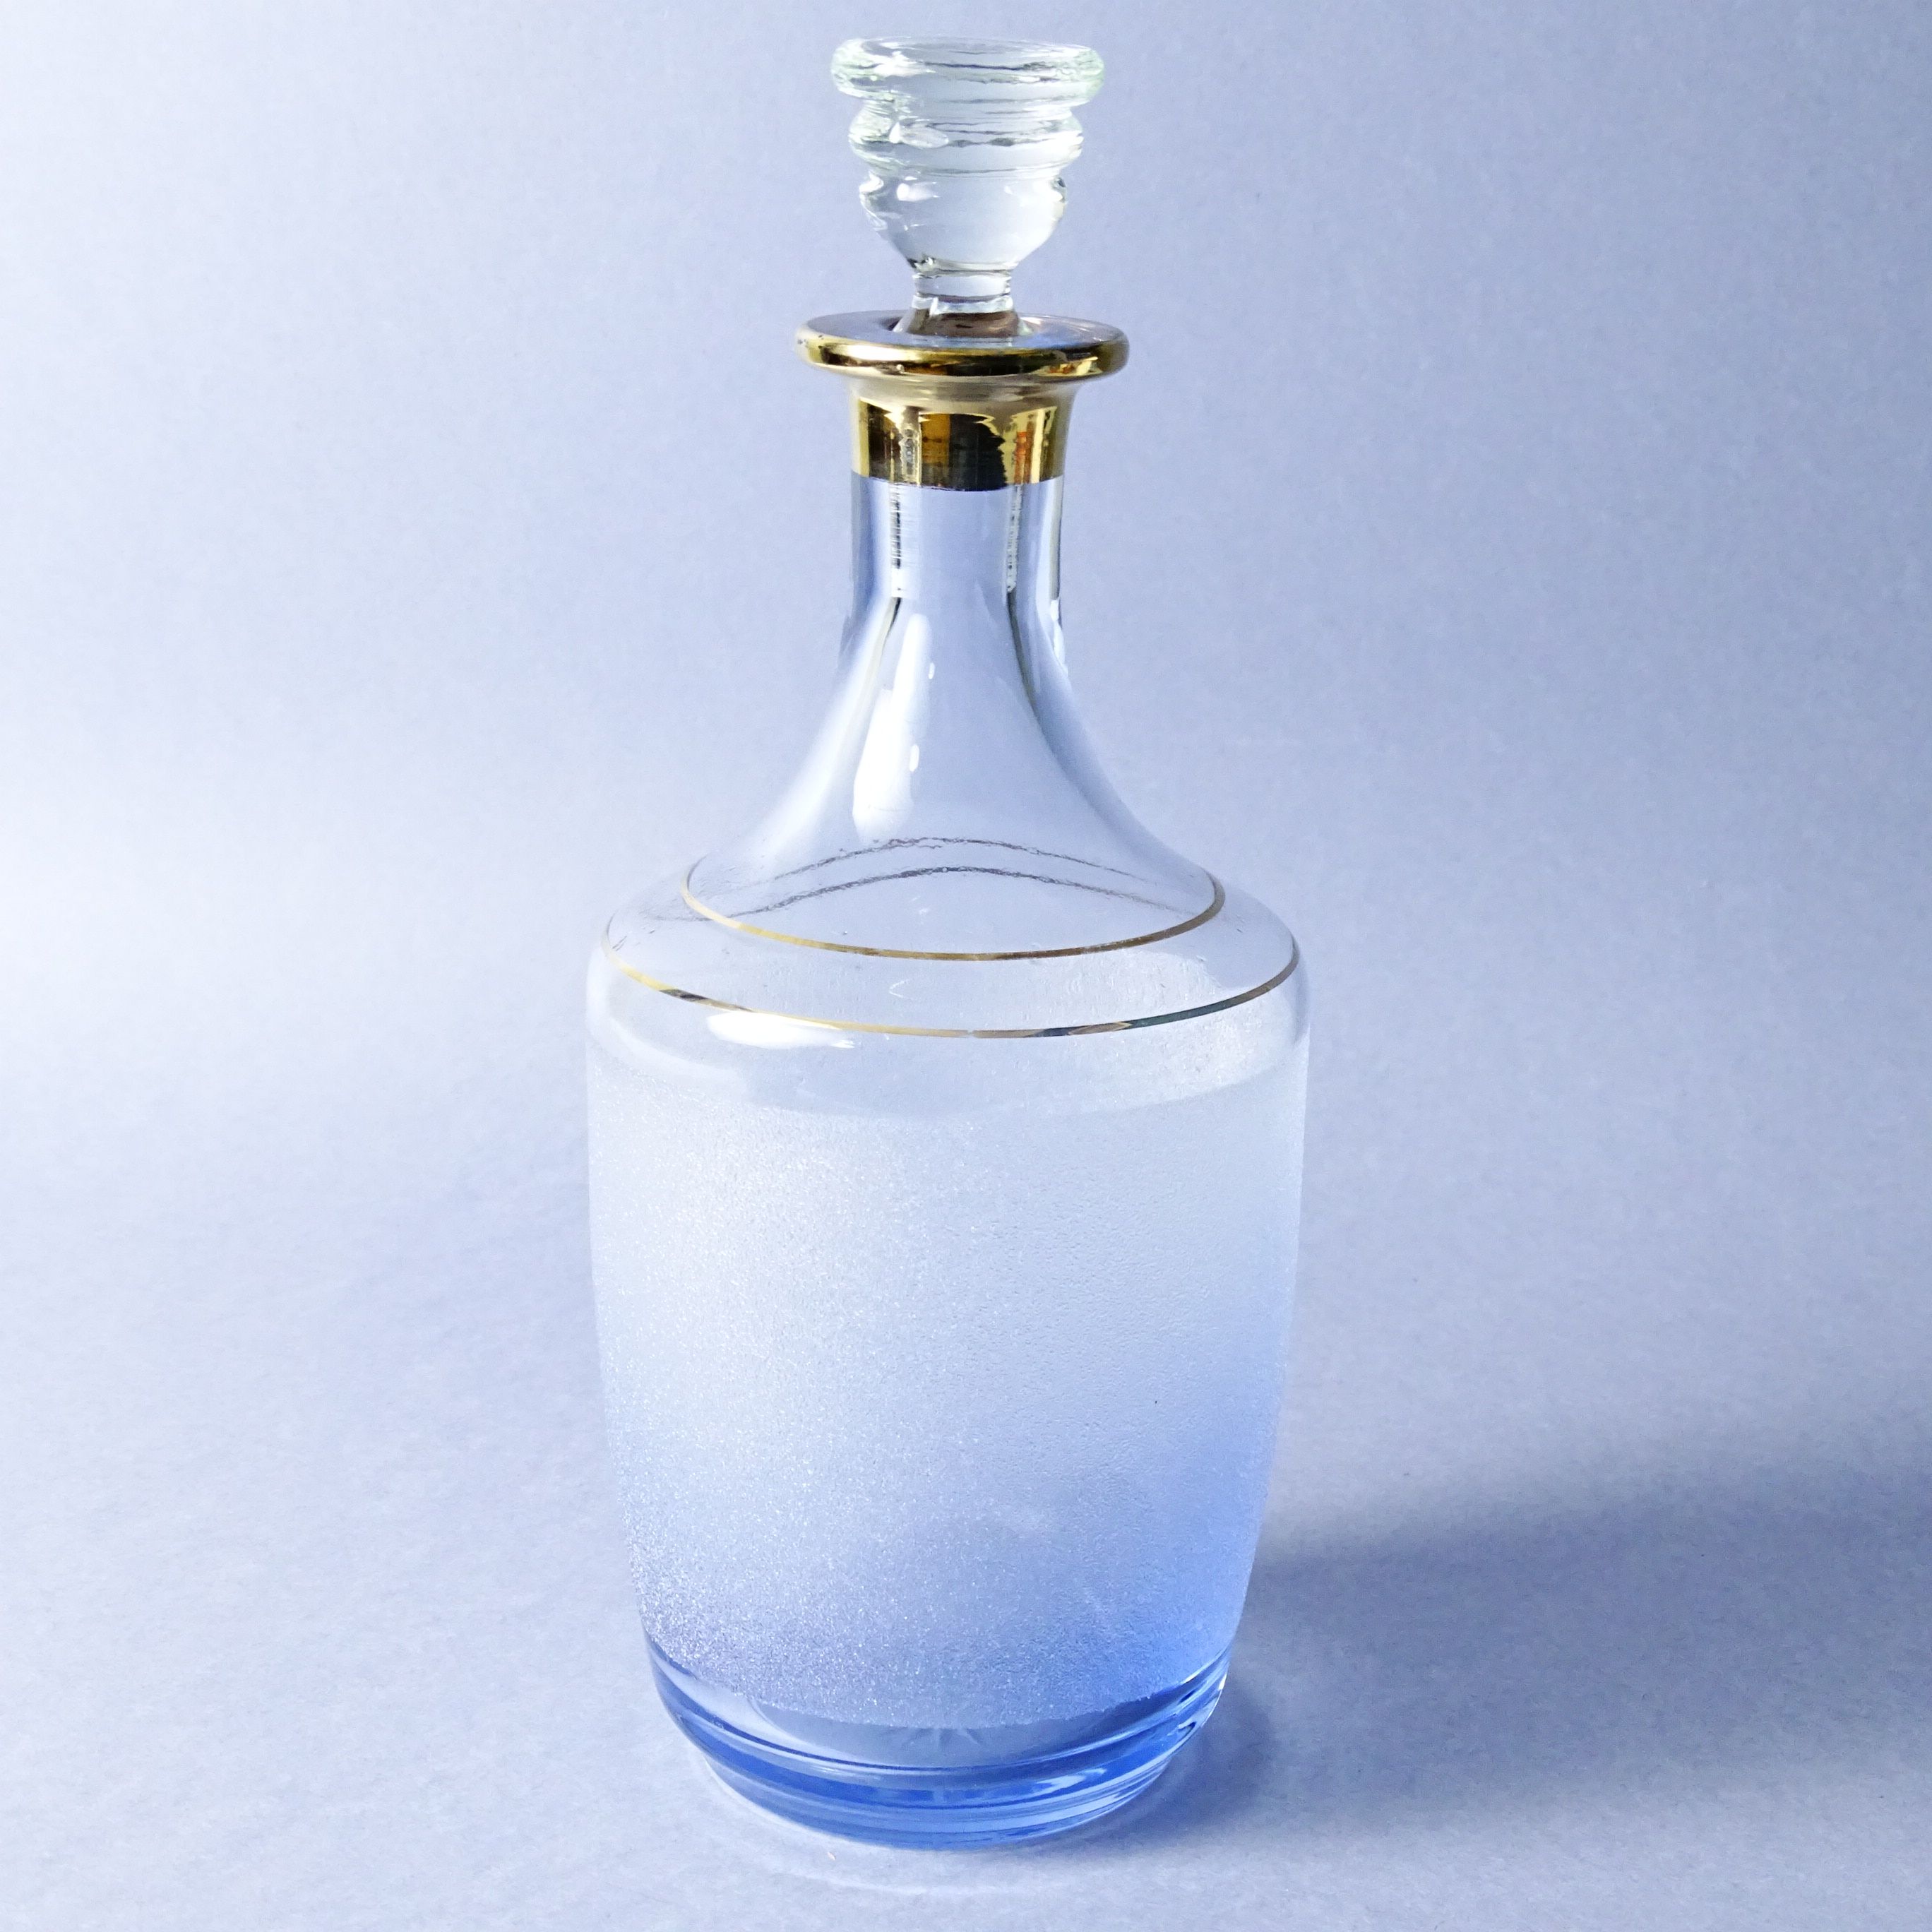 piękna stara błękitna szklana karafka lata 60-te